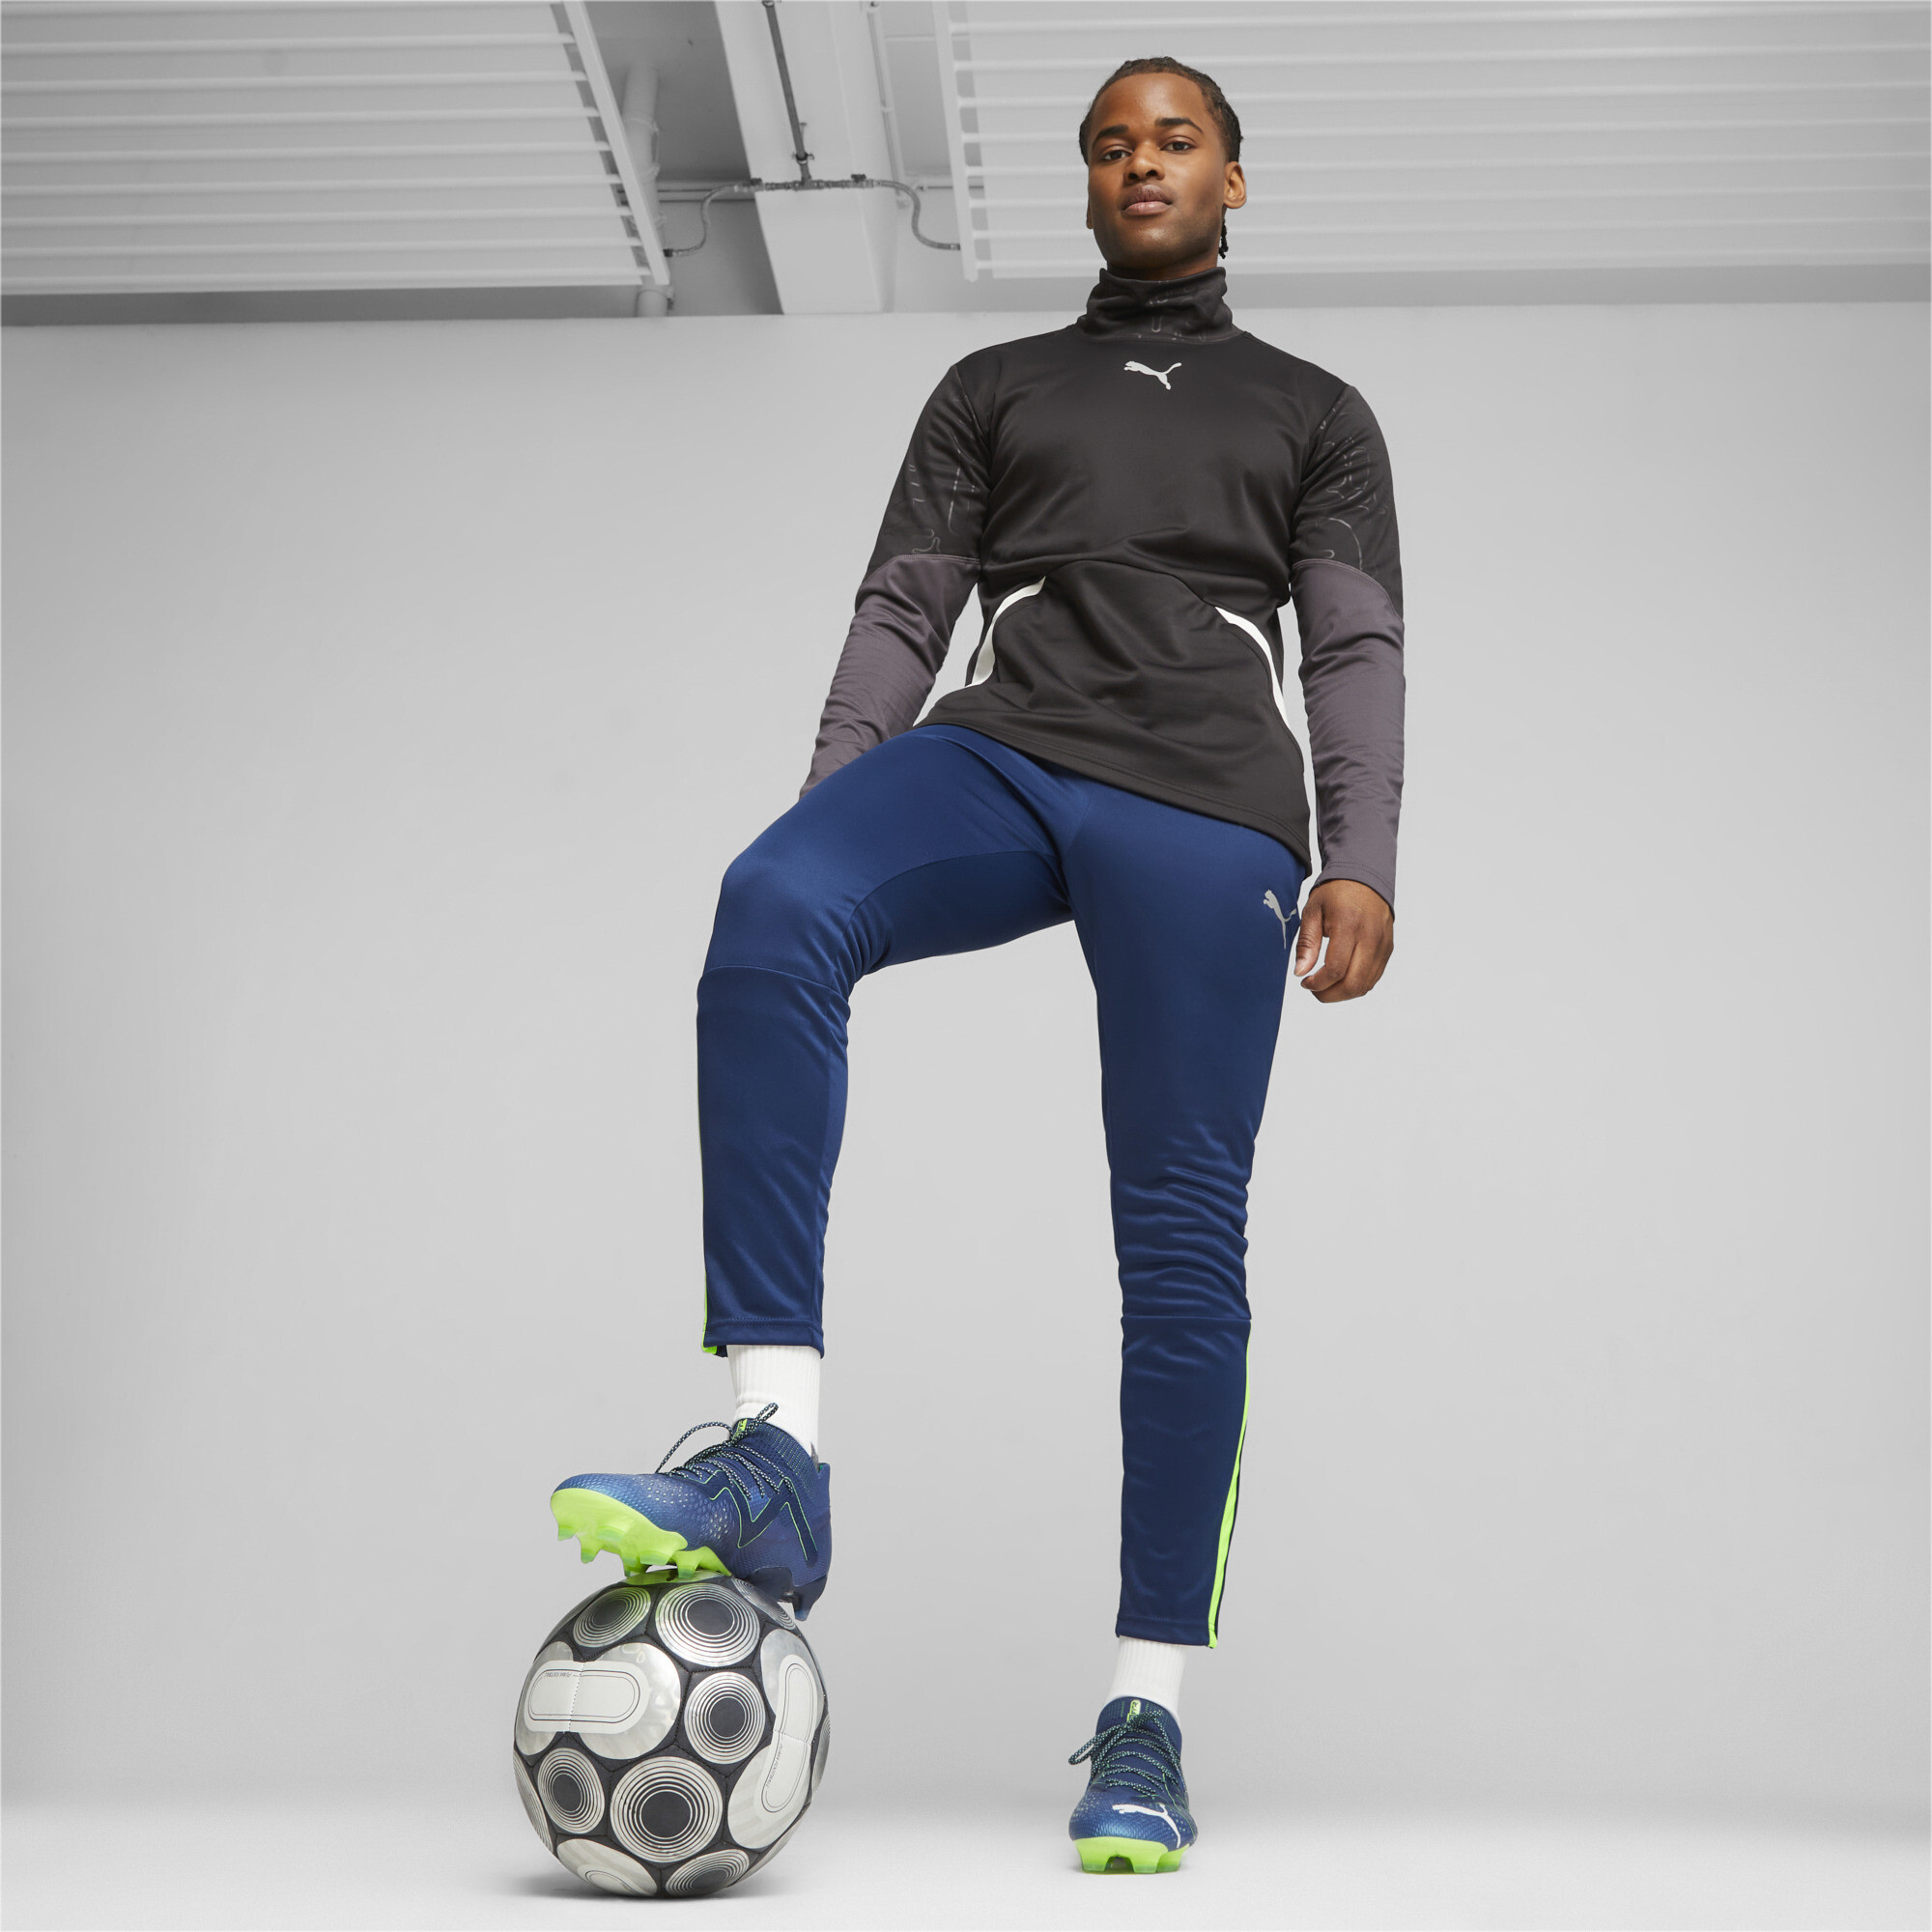 Men's PUMA FUTURE ULTIMATE FG/AG Football Boots In Blue, Size EU 42.5